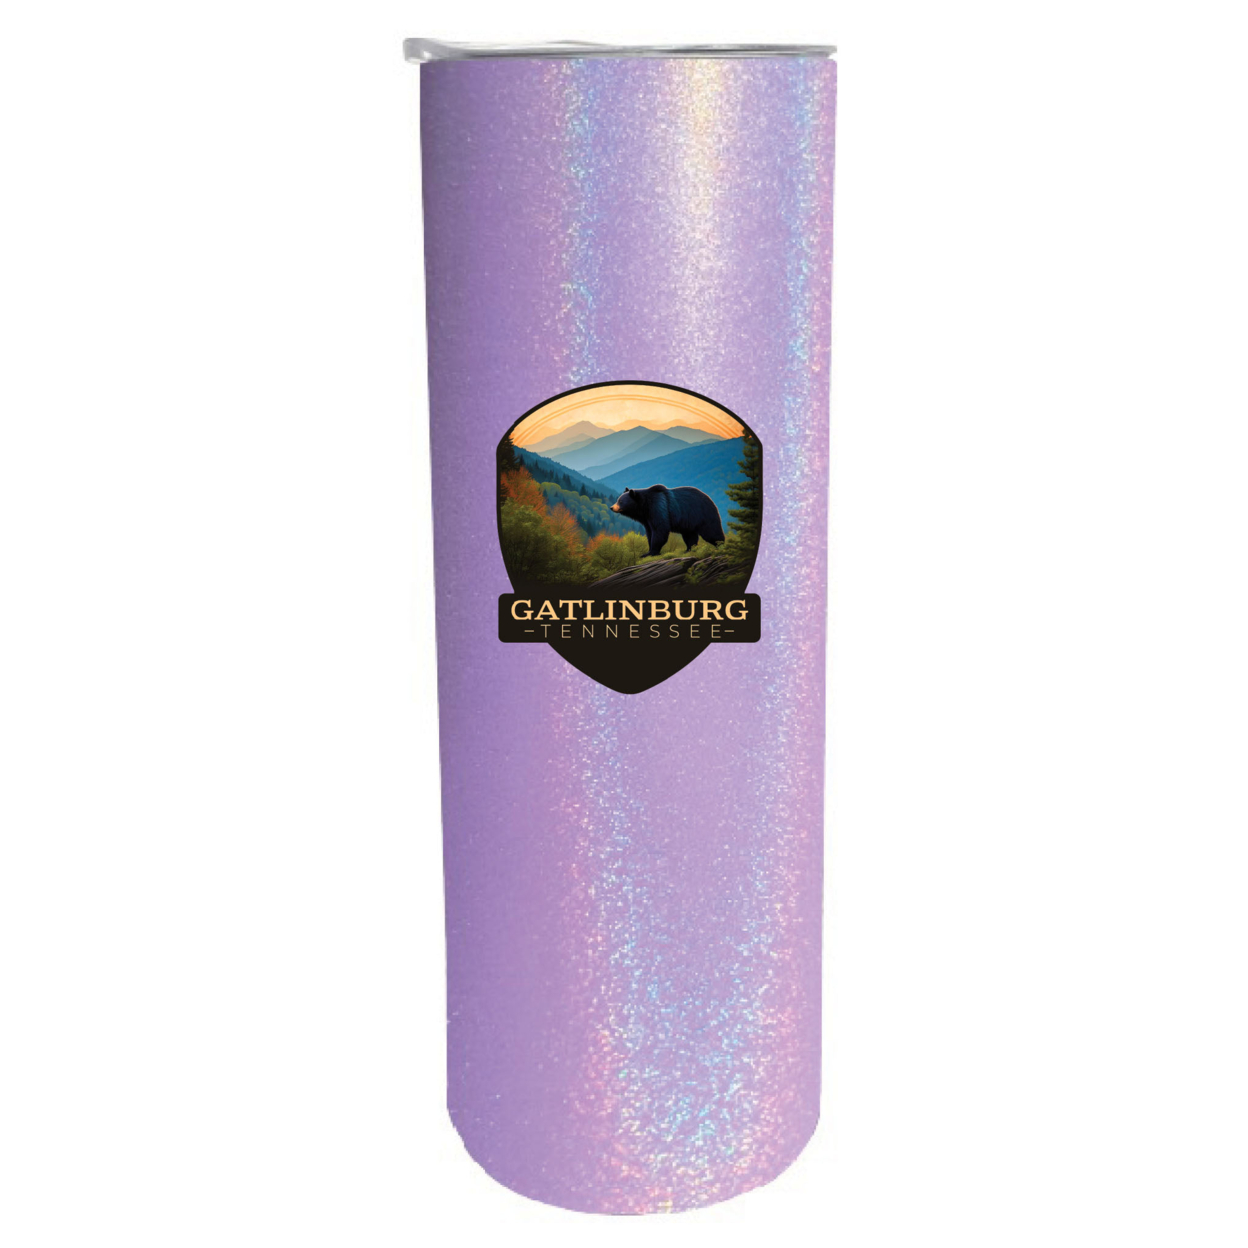 Gatlinburg Tennessee Souvenir 20 Oz Insulated Stainless Steel Skinny Tumbler - Rainbow Glitter Pink, A